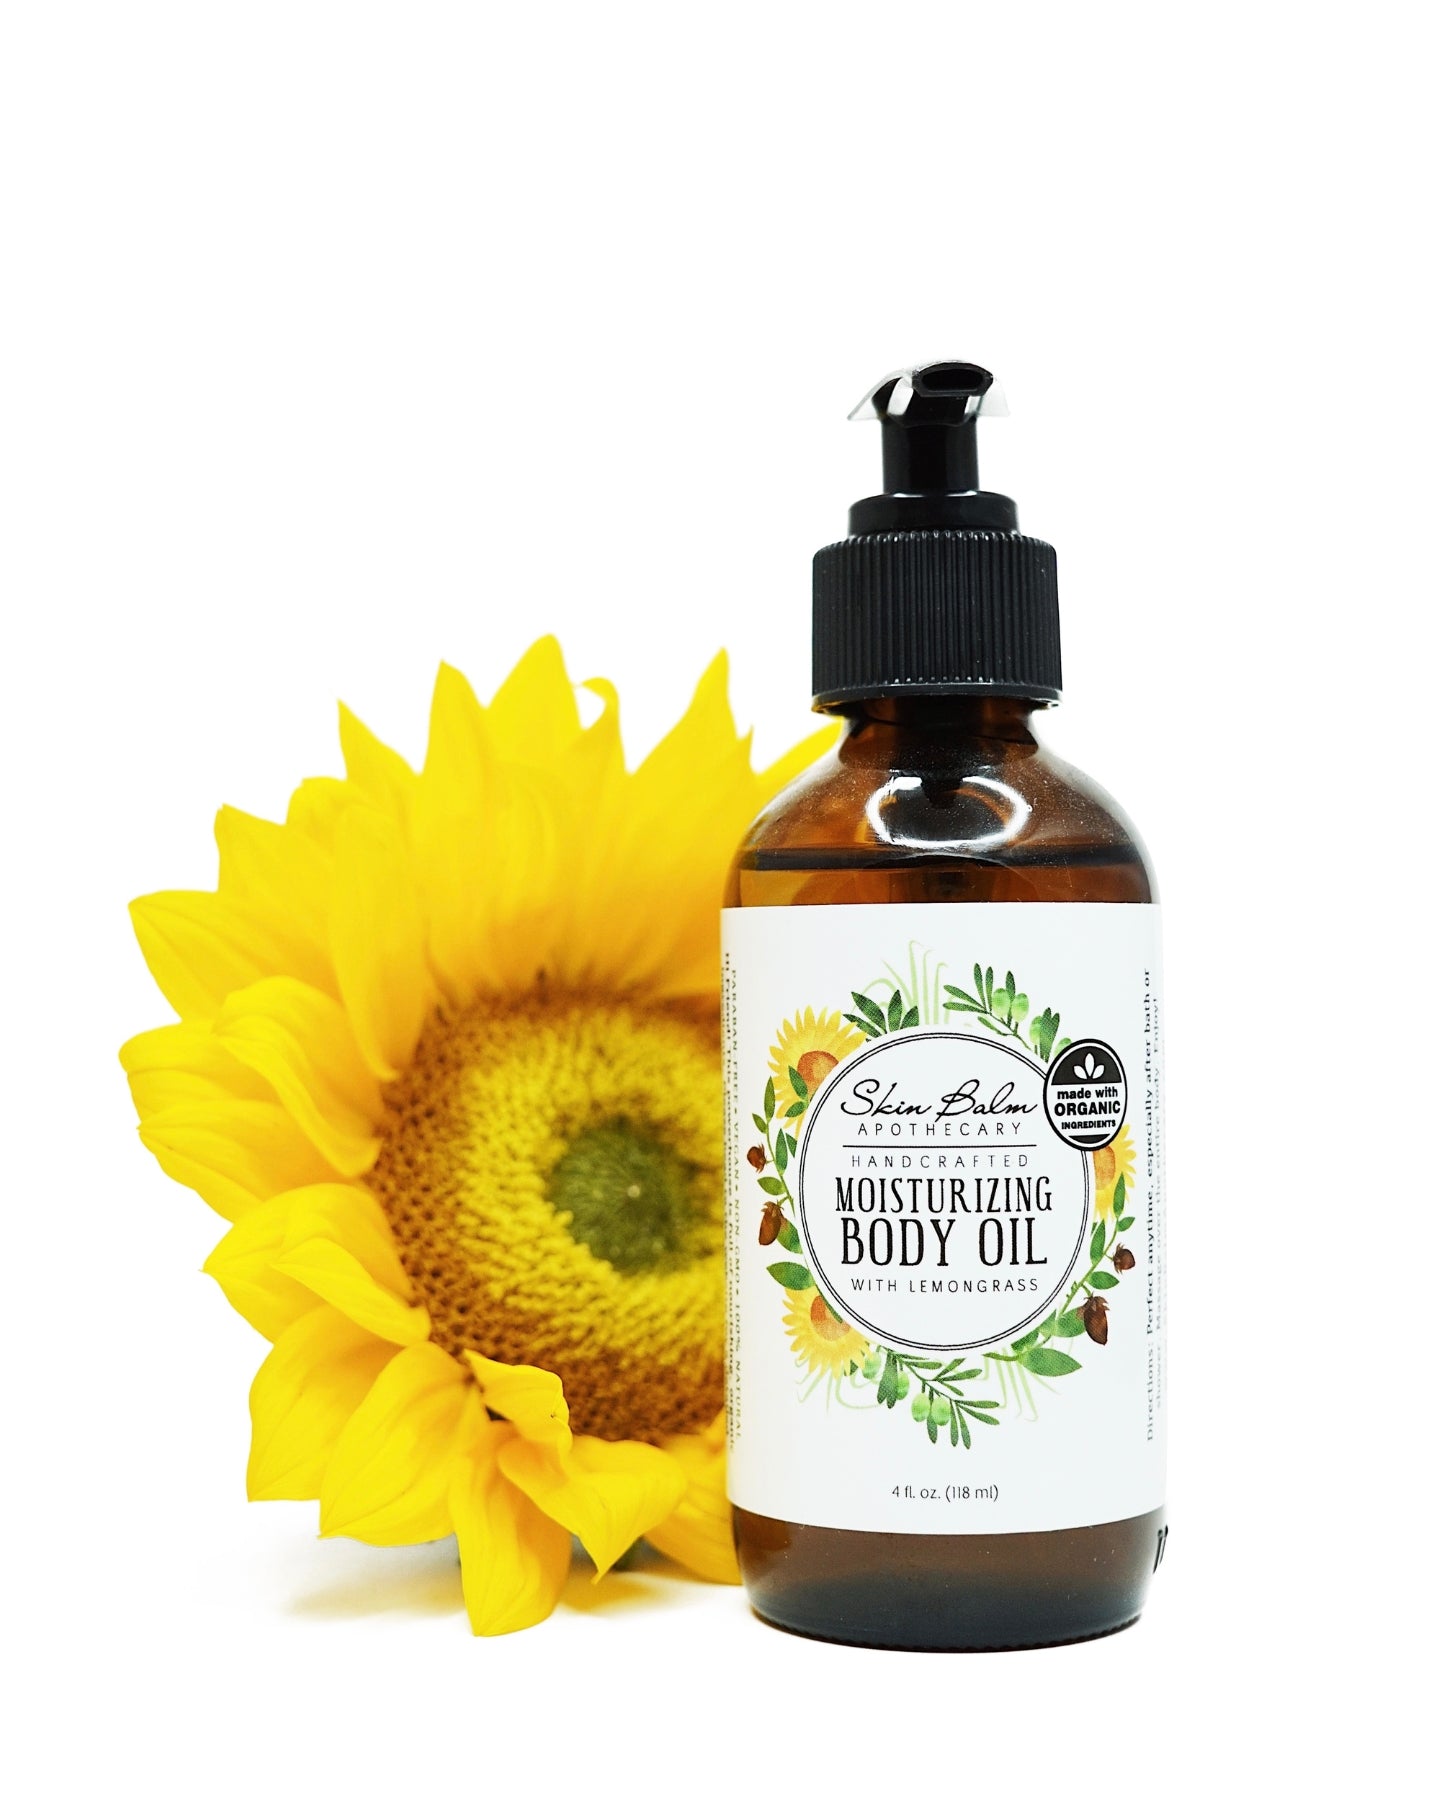 Lemongrass Moisturizing Body Oil with a sunflower against a white background.